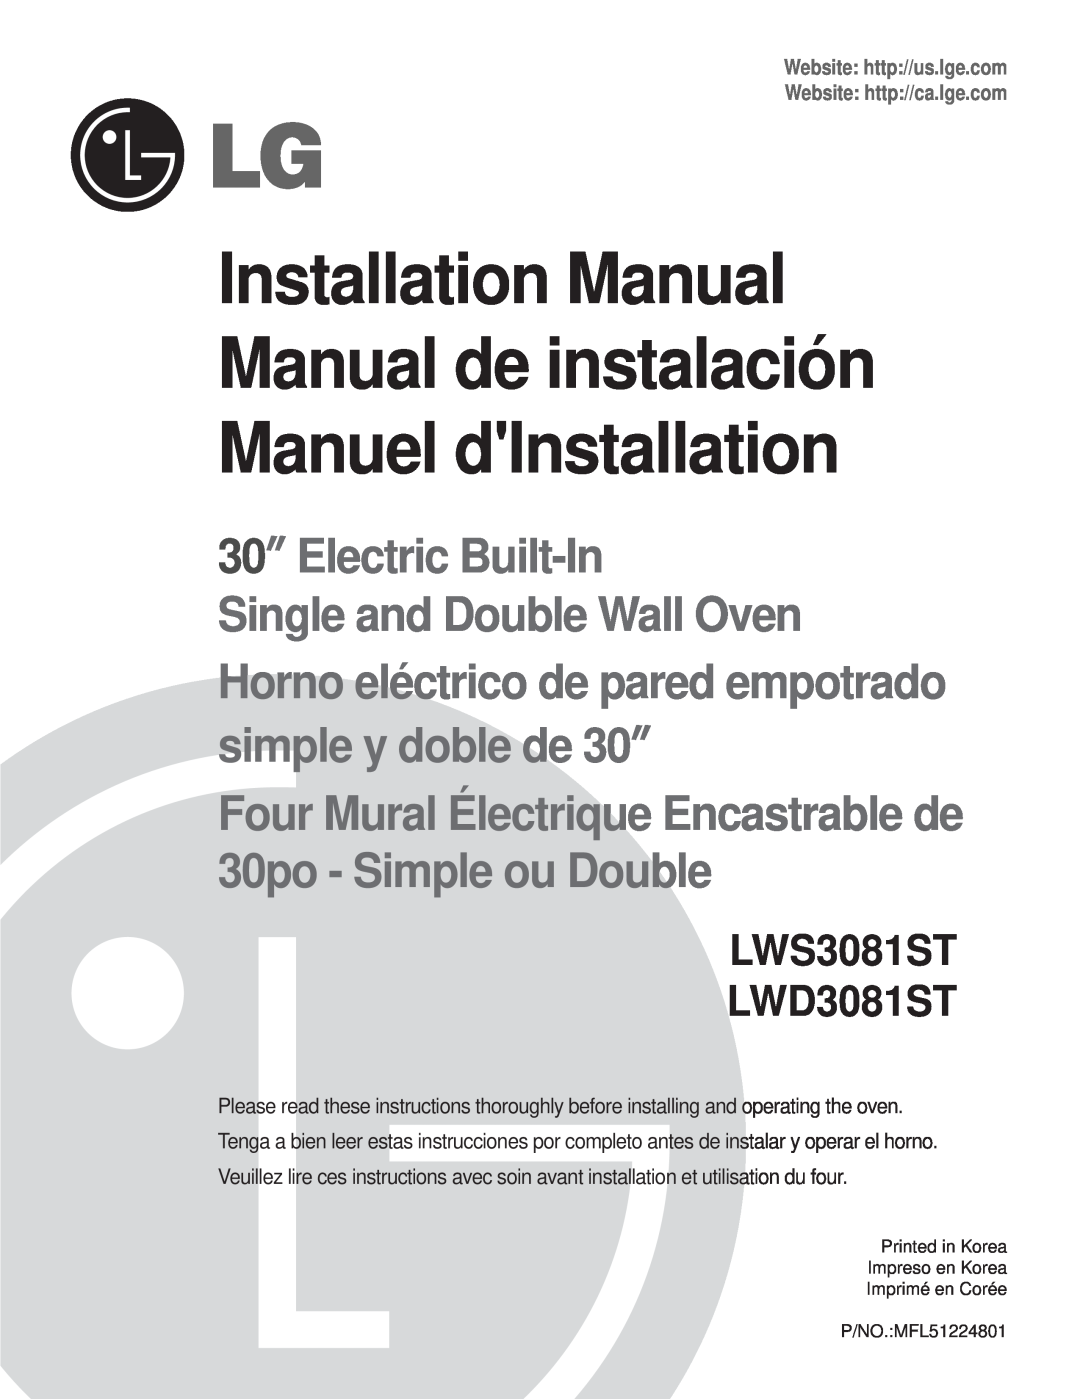 LG Electronics LWD3081ST installation manual English Español Français, Electric Convection Built-Inoven, MFL51224801 